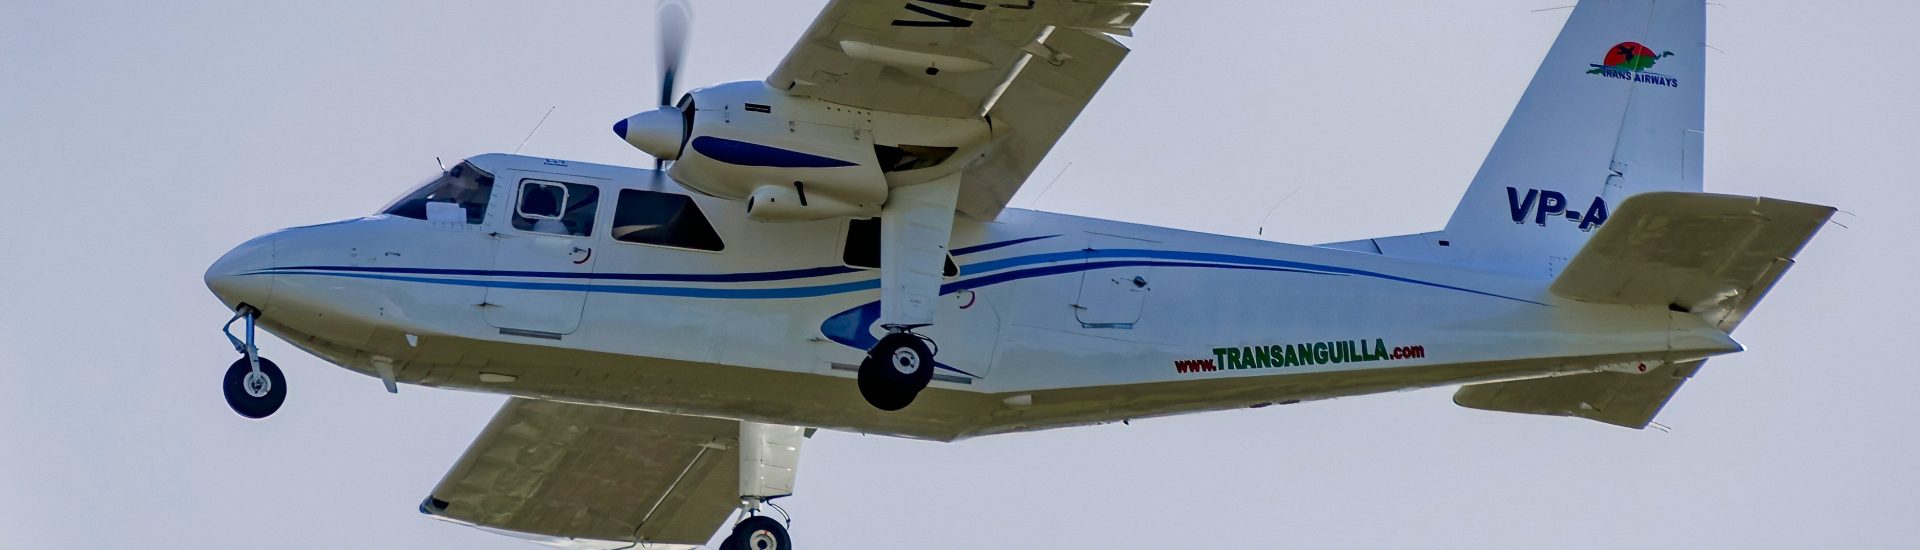 BN-2B Trans Anguilla Airways VP-AAF